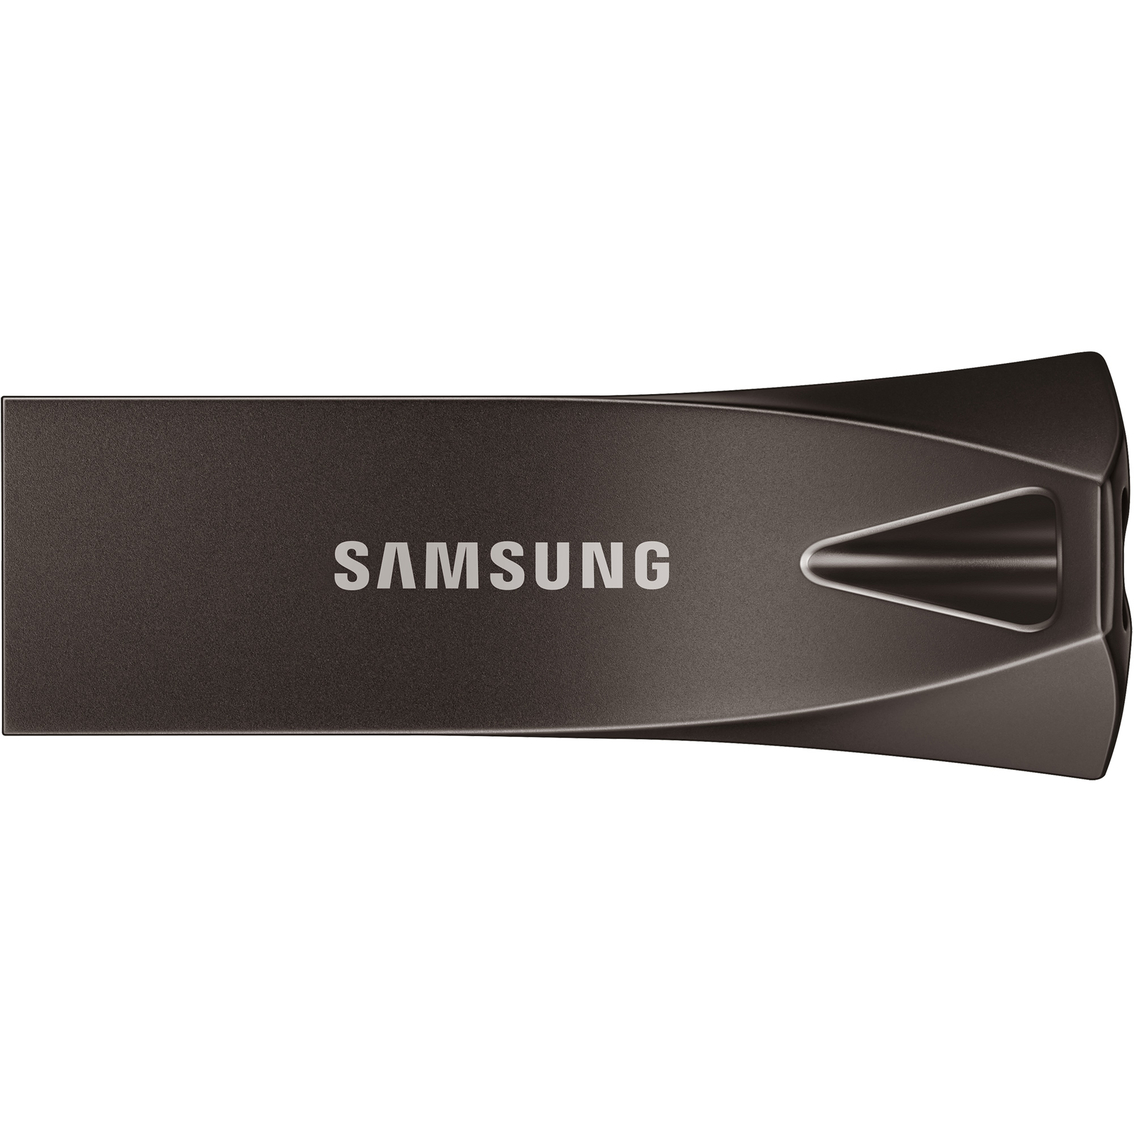 Samsung BAR Plus 64GB USB 3.1 Flash Drive - Image 3 of 3